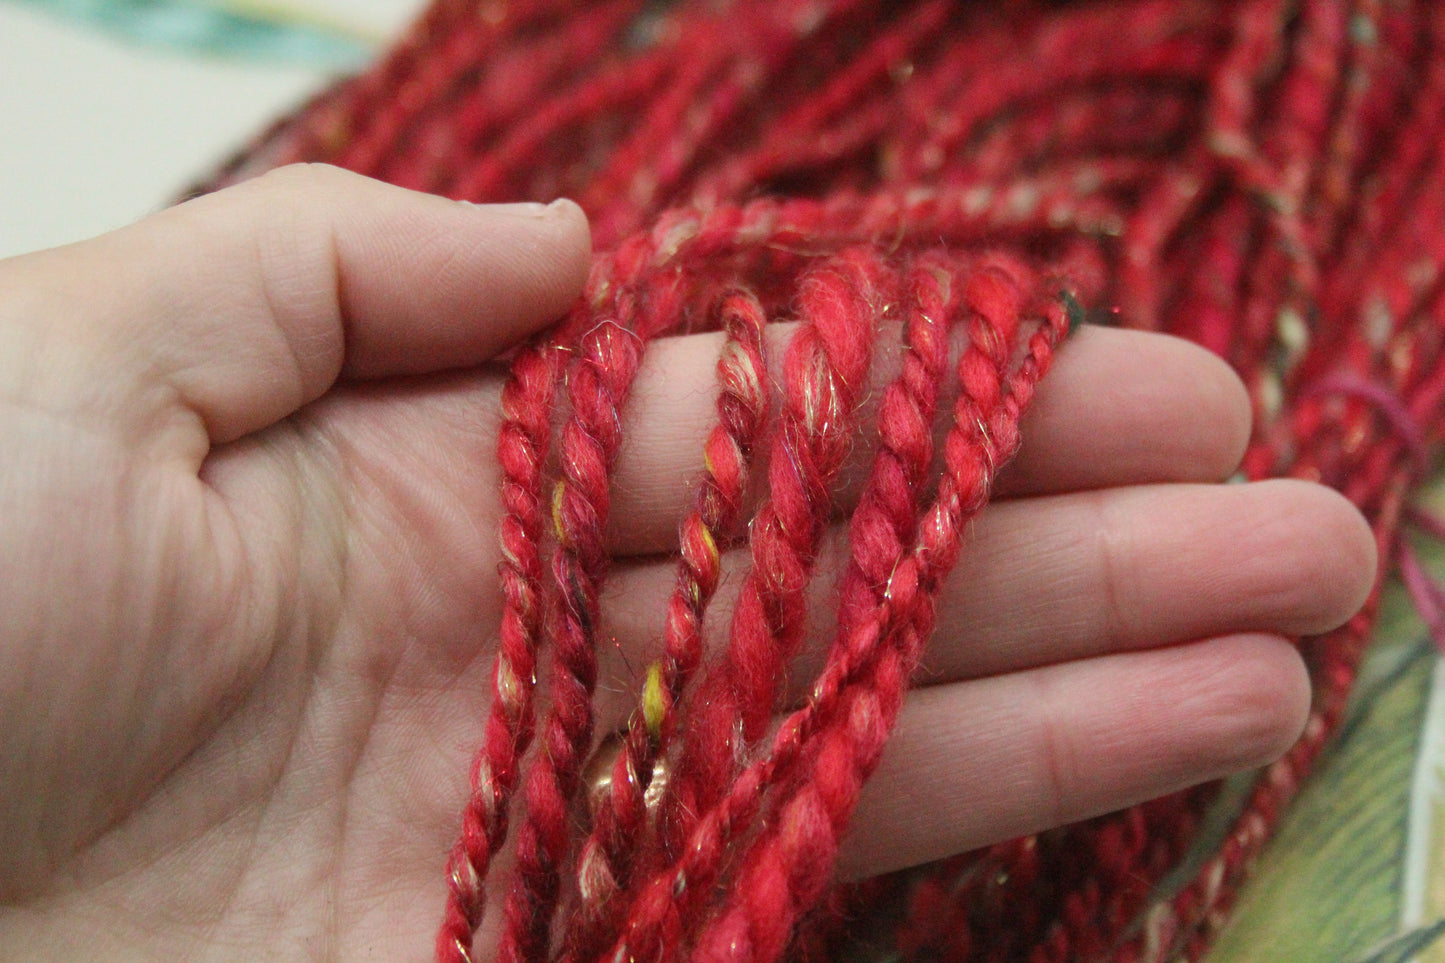 Handspun Yarn - Red Green Gold - Christmas - 18mtrs/20yards 18g/0.6oz - Yarn for crocheting. knitting, weaving...